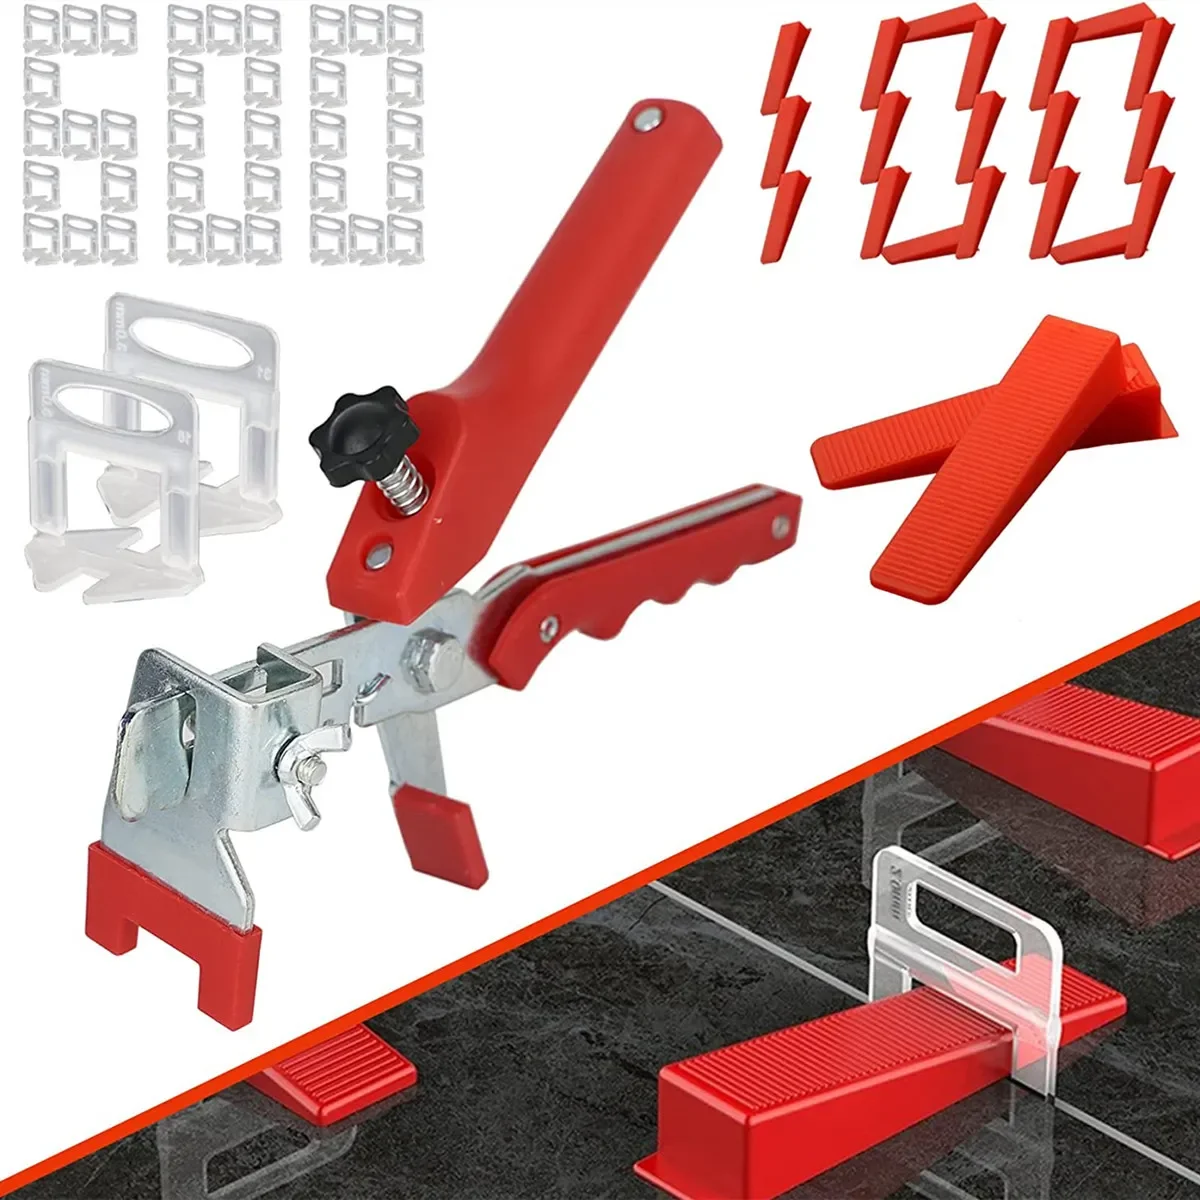 

Tiles Kit Spacers Plier, Clips+100pcs With Construction Tools Leveling System Tile Tile Leveling Leveler 600pcs Wedges+1 701pcs